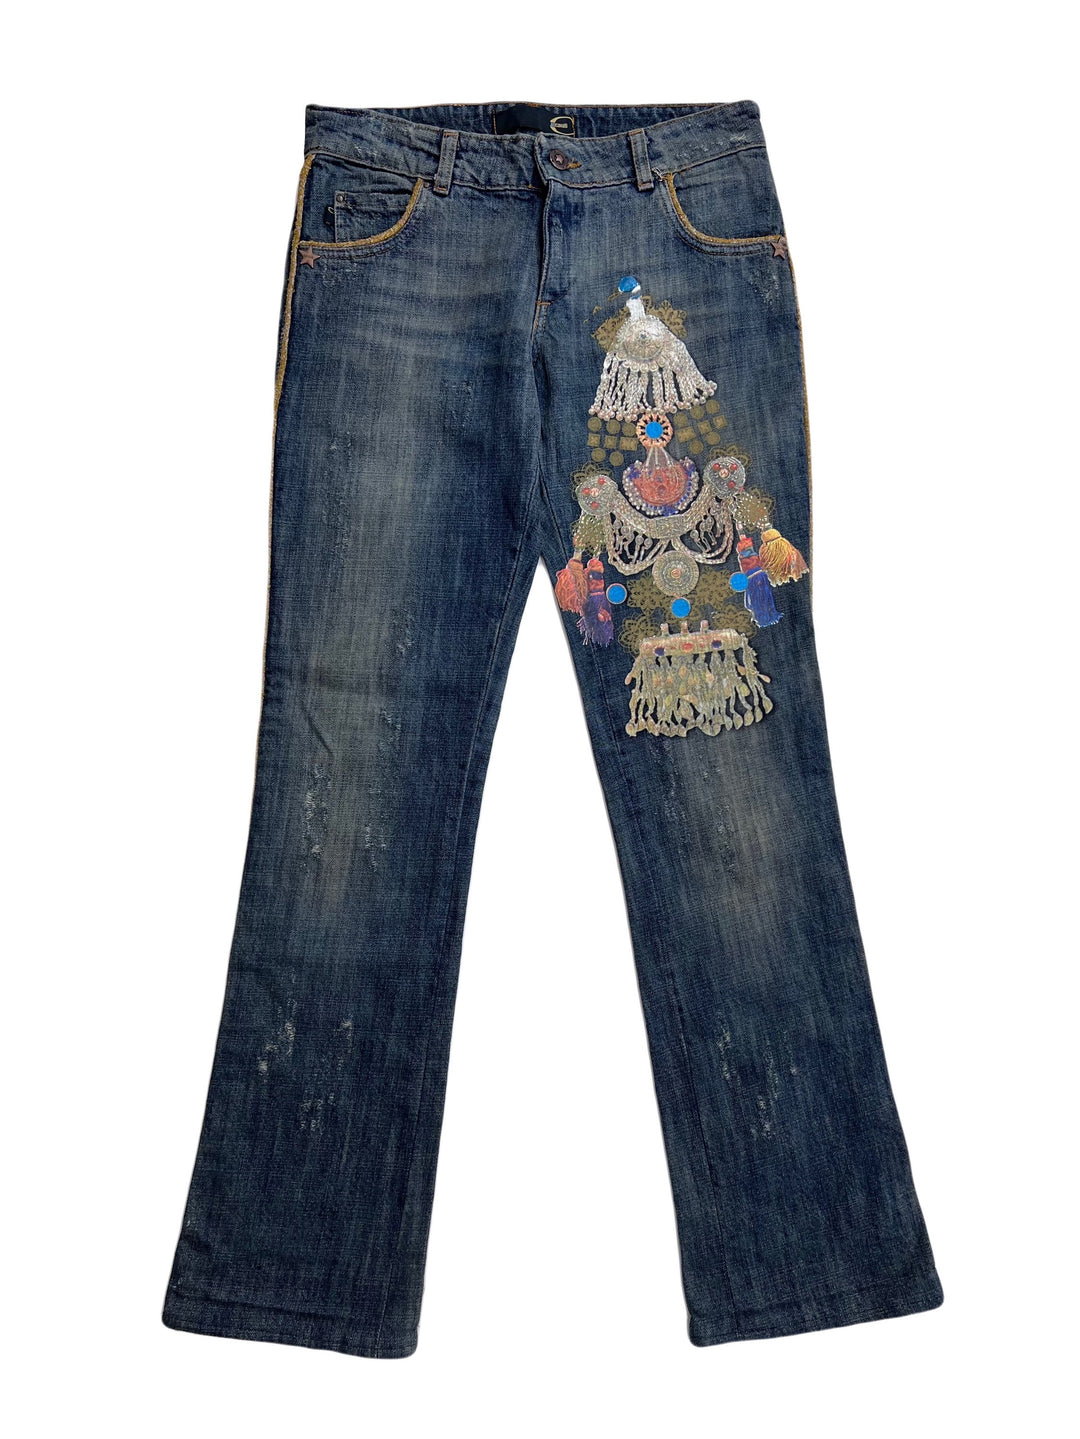 Just Cavalli Low Waisted Jeans Women's Medium(38)